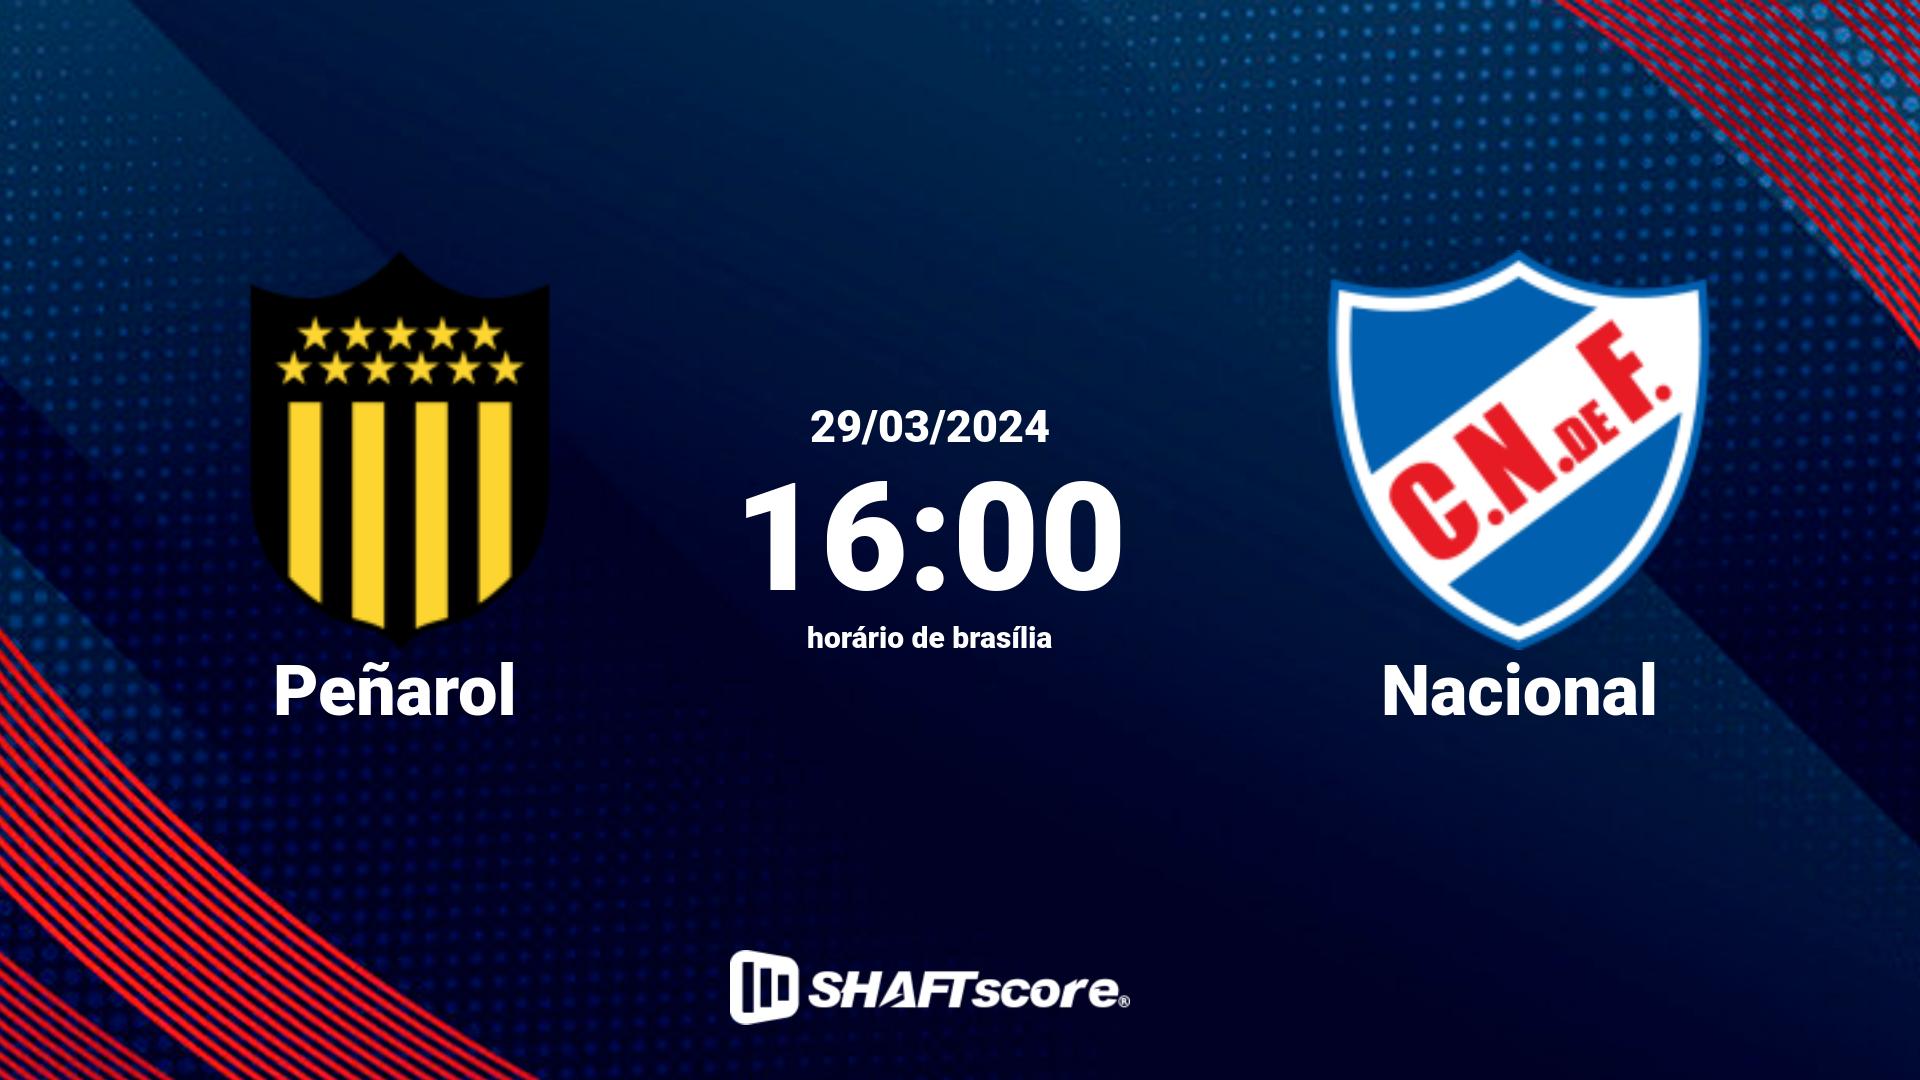 Estatísticas do jogo Peñarol vs Nacional 29.03 16:00